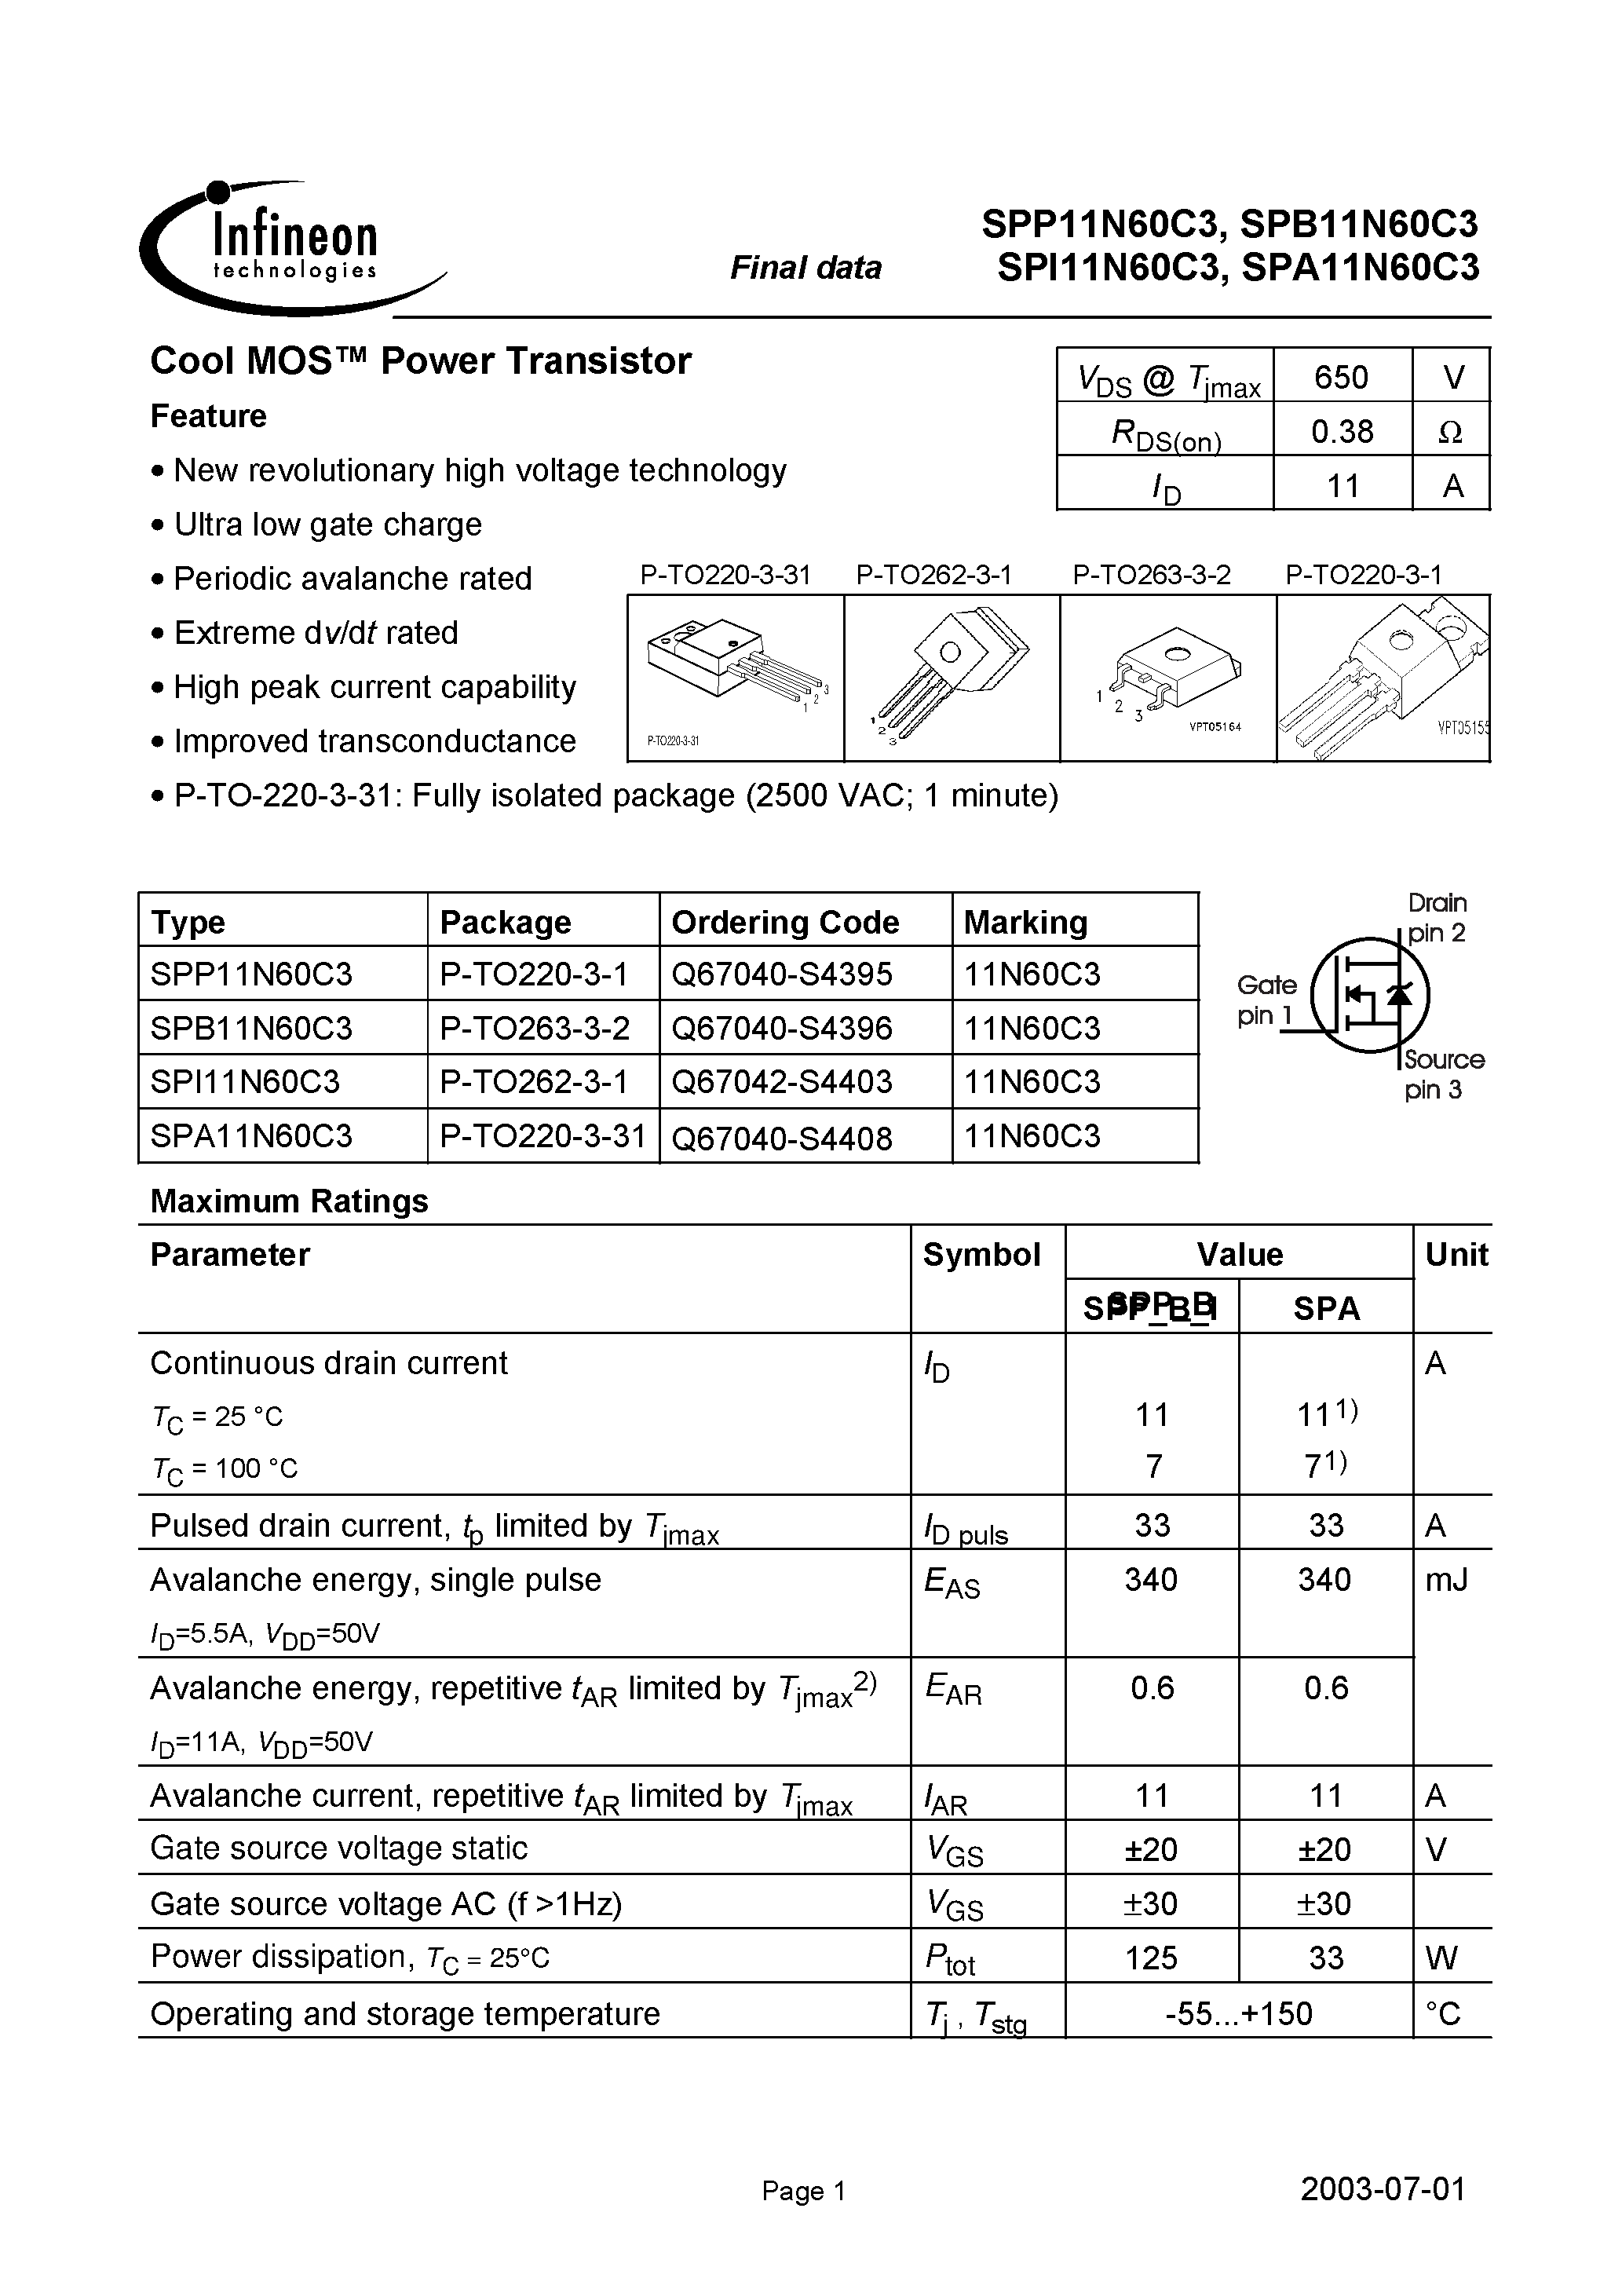 Datasheet SPI11N60C3 - Cool MOS Power Transistor page 1